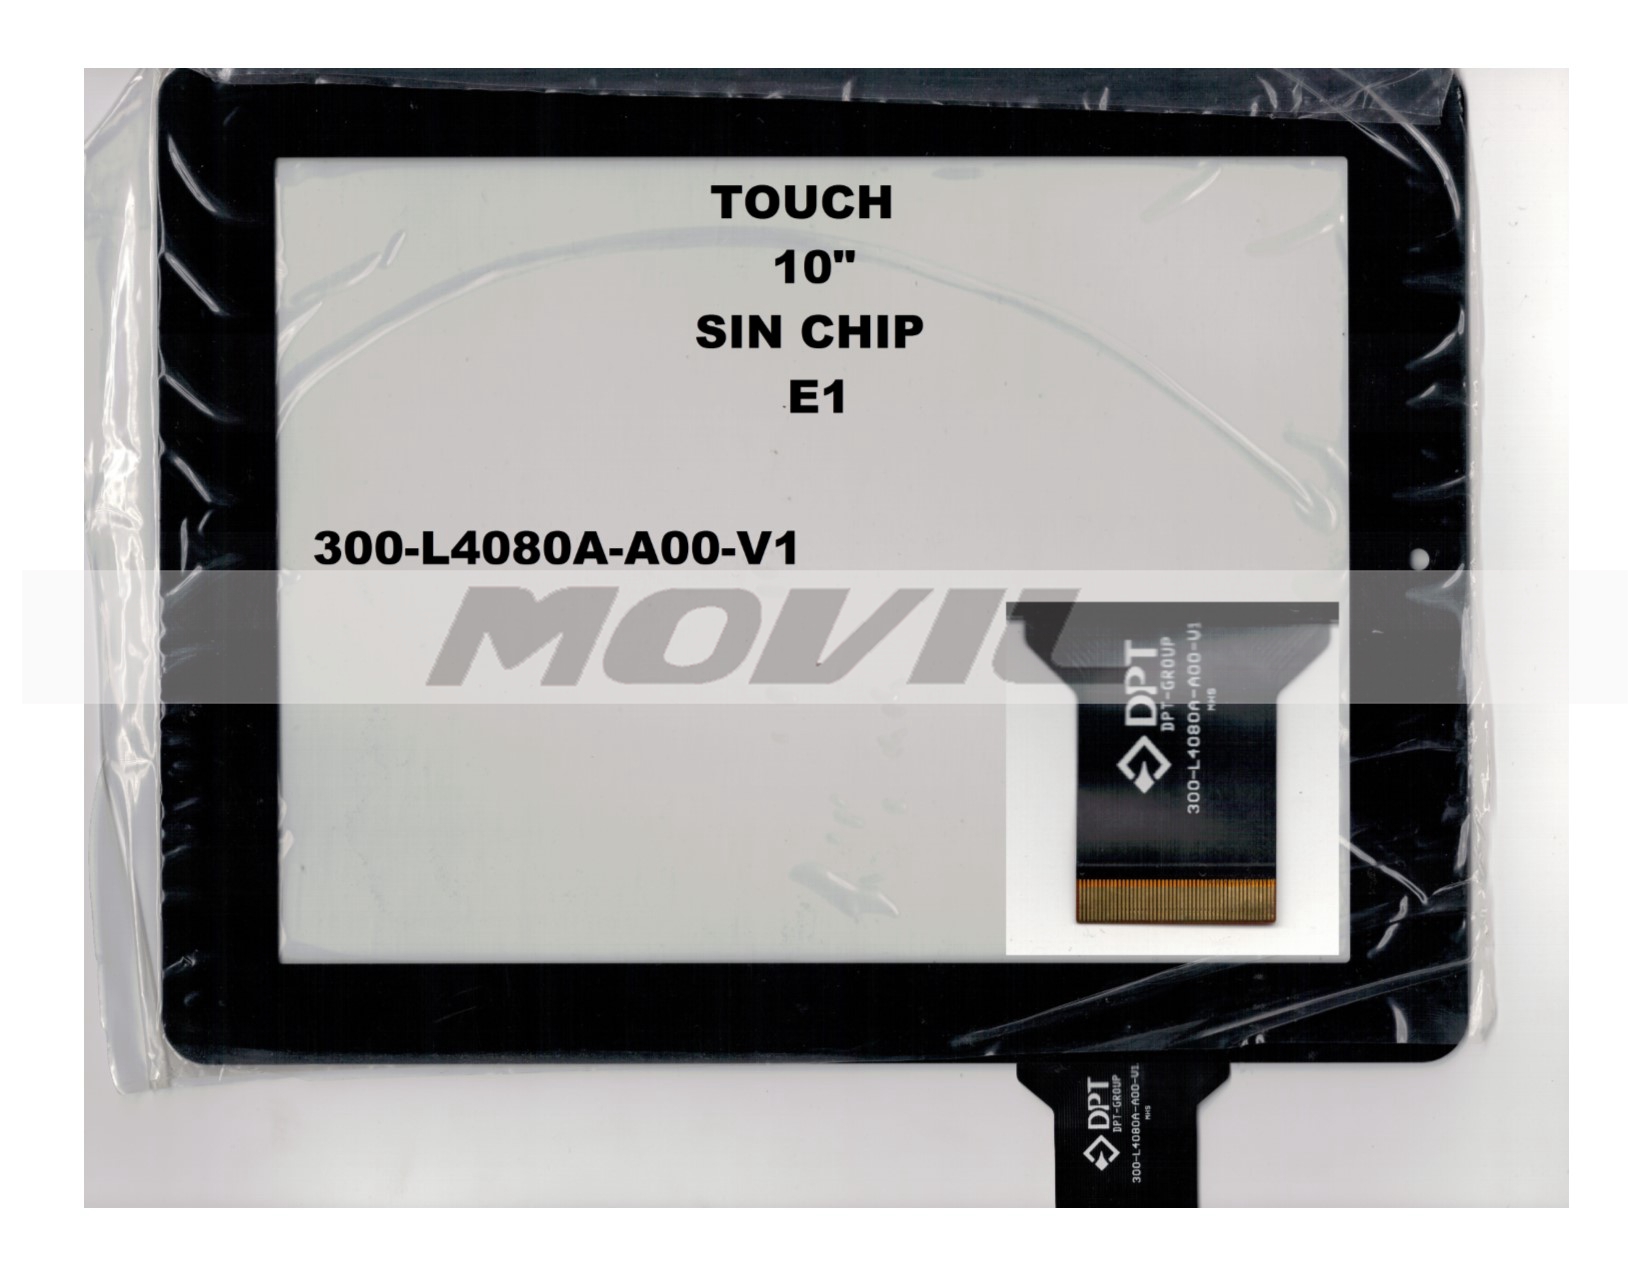 Touch tactil para tablet flex 10 inch SIN CHIP E1 300-L4080A-A00-V1